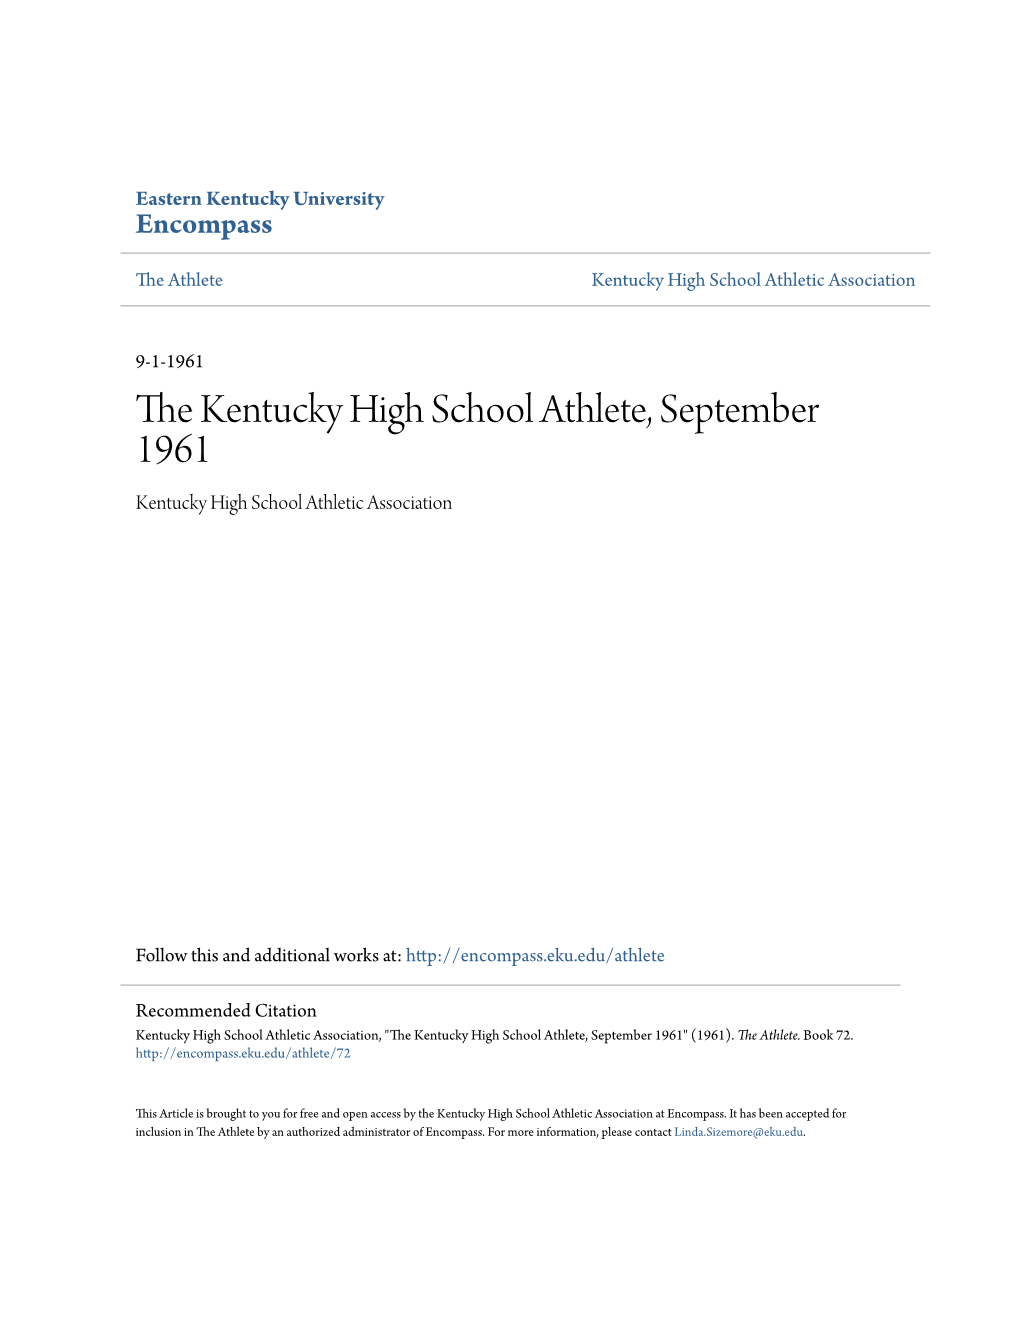 The Kentucky High School Athlete, September 1961 Kentucky High School Athletic Association